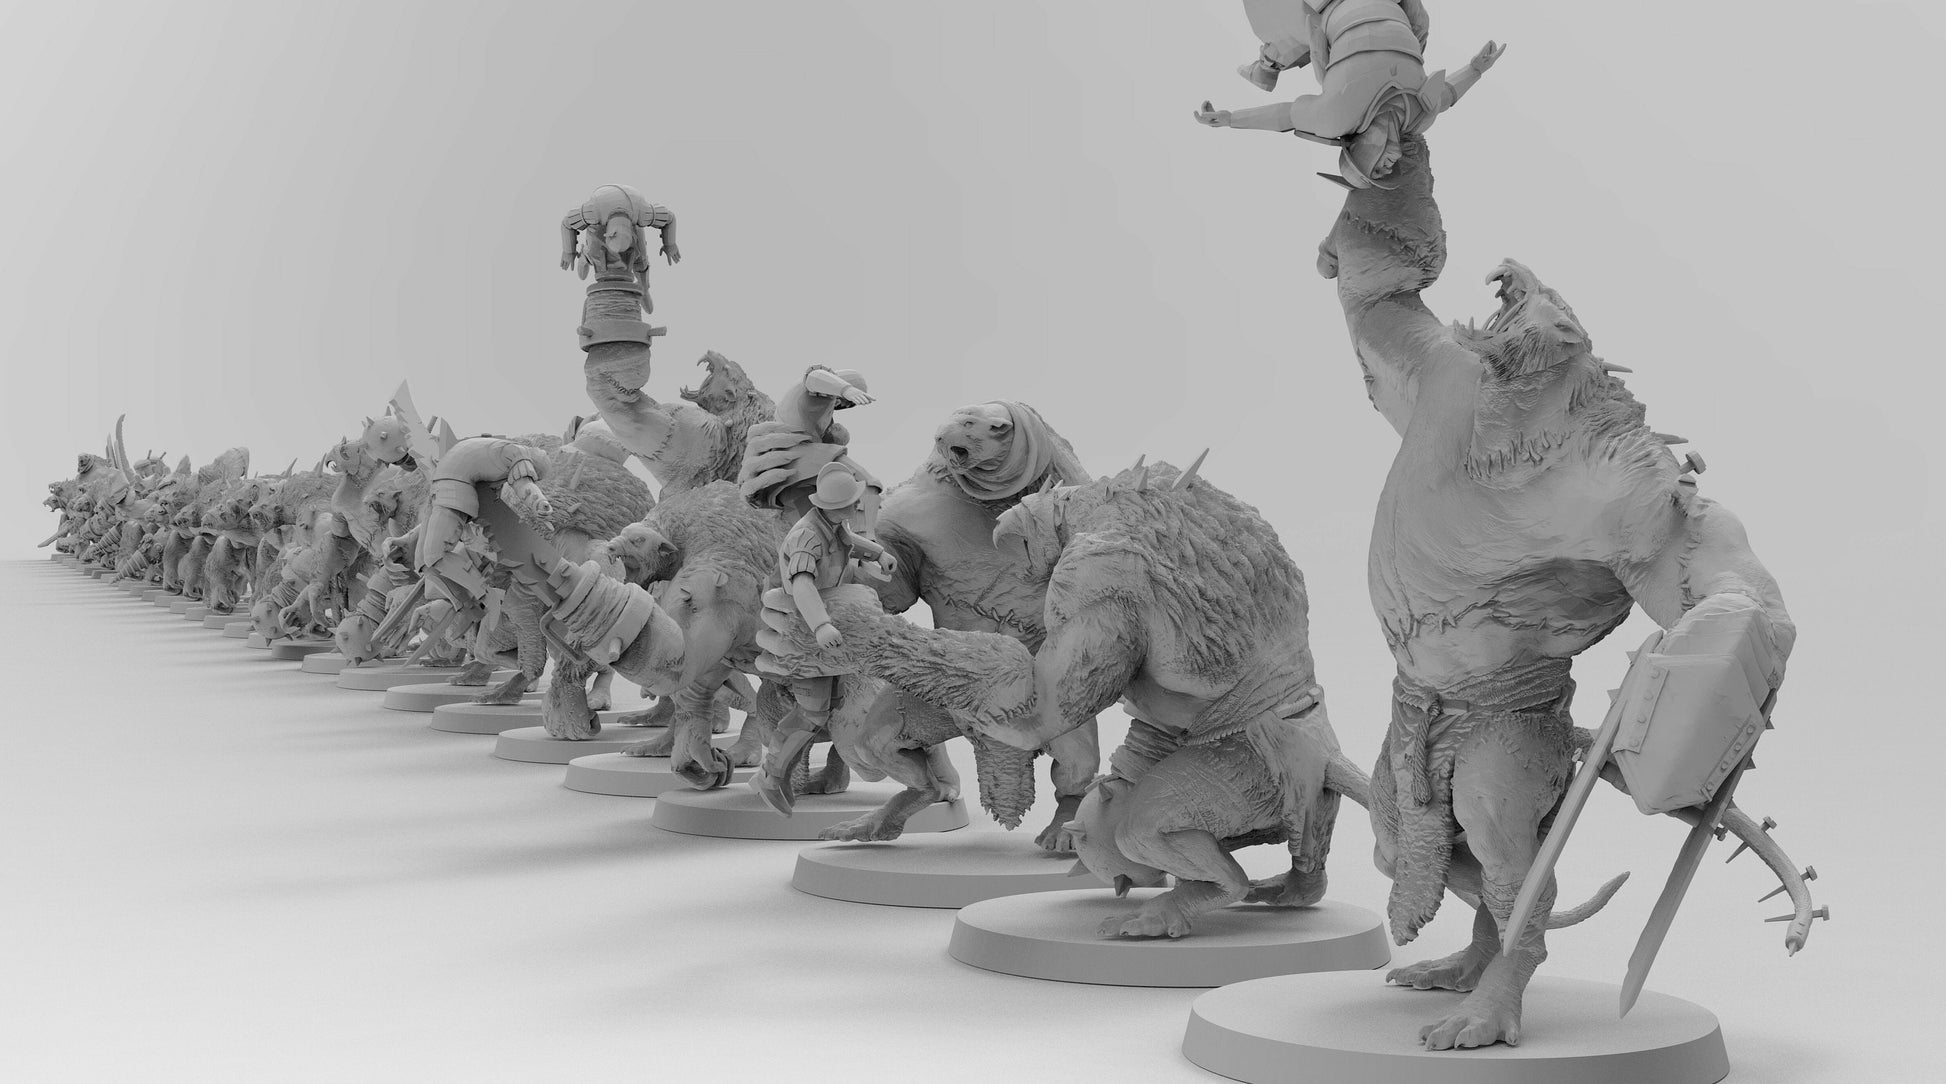 Ratmen Ogres | Many Poses | Ratmen | Resin 3D Printed Miniatures | EmanG | Table Top Gaming | RPG | D&D | Pathfinder